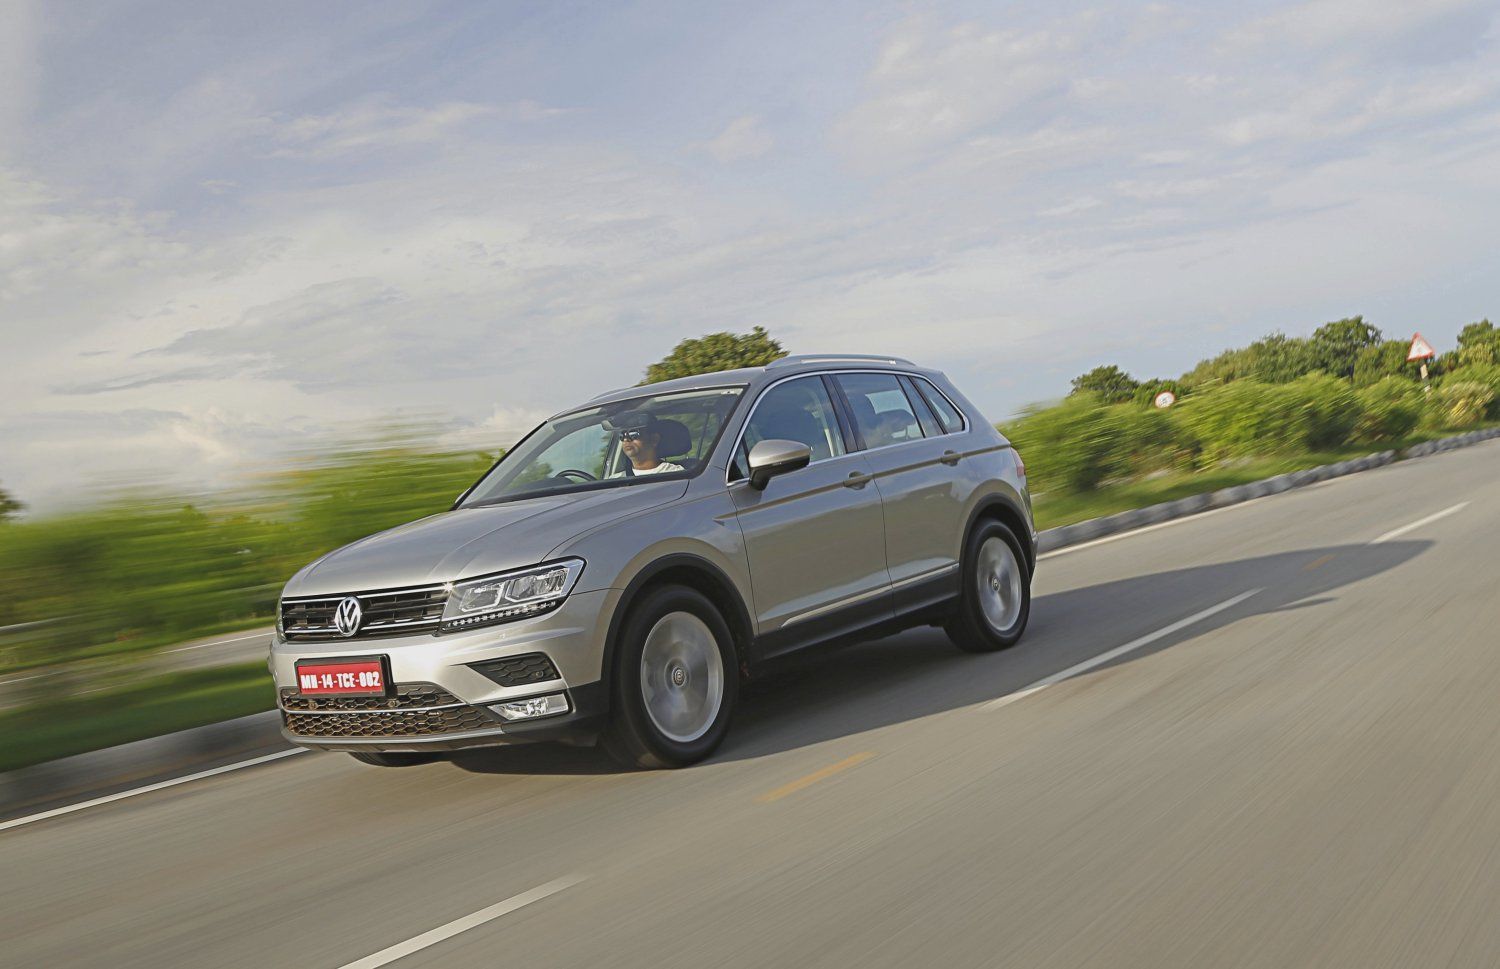 Volkswagen Tiguan: First Drive Review